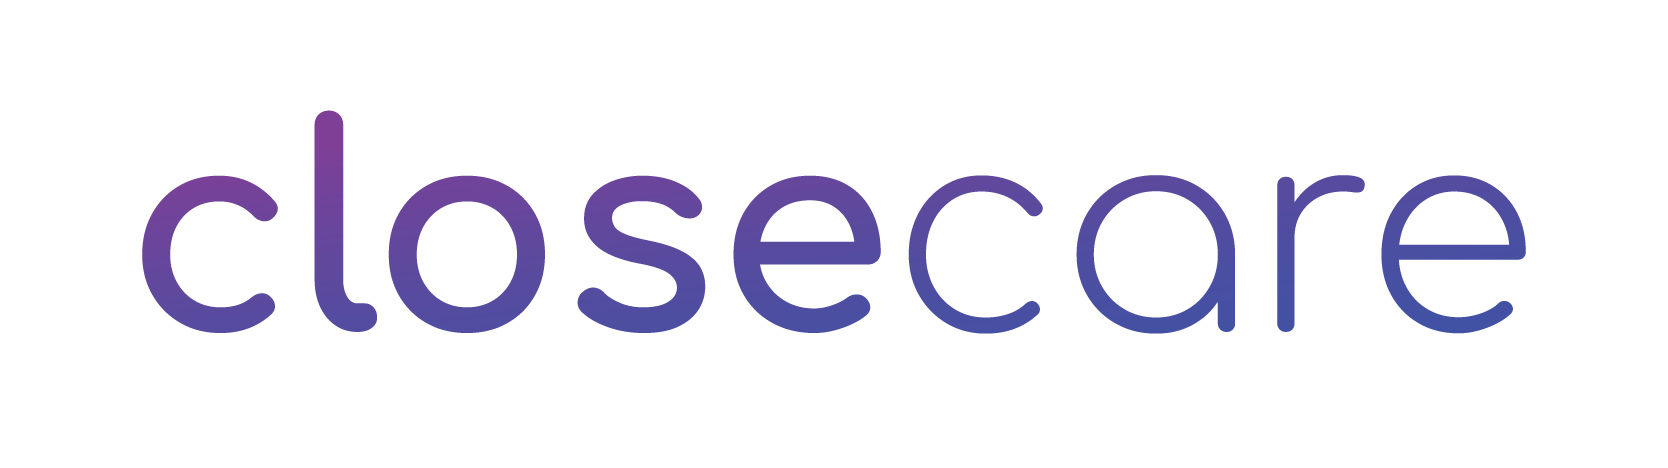 Logo Closecare-01